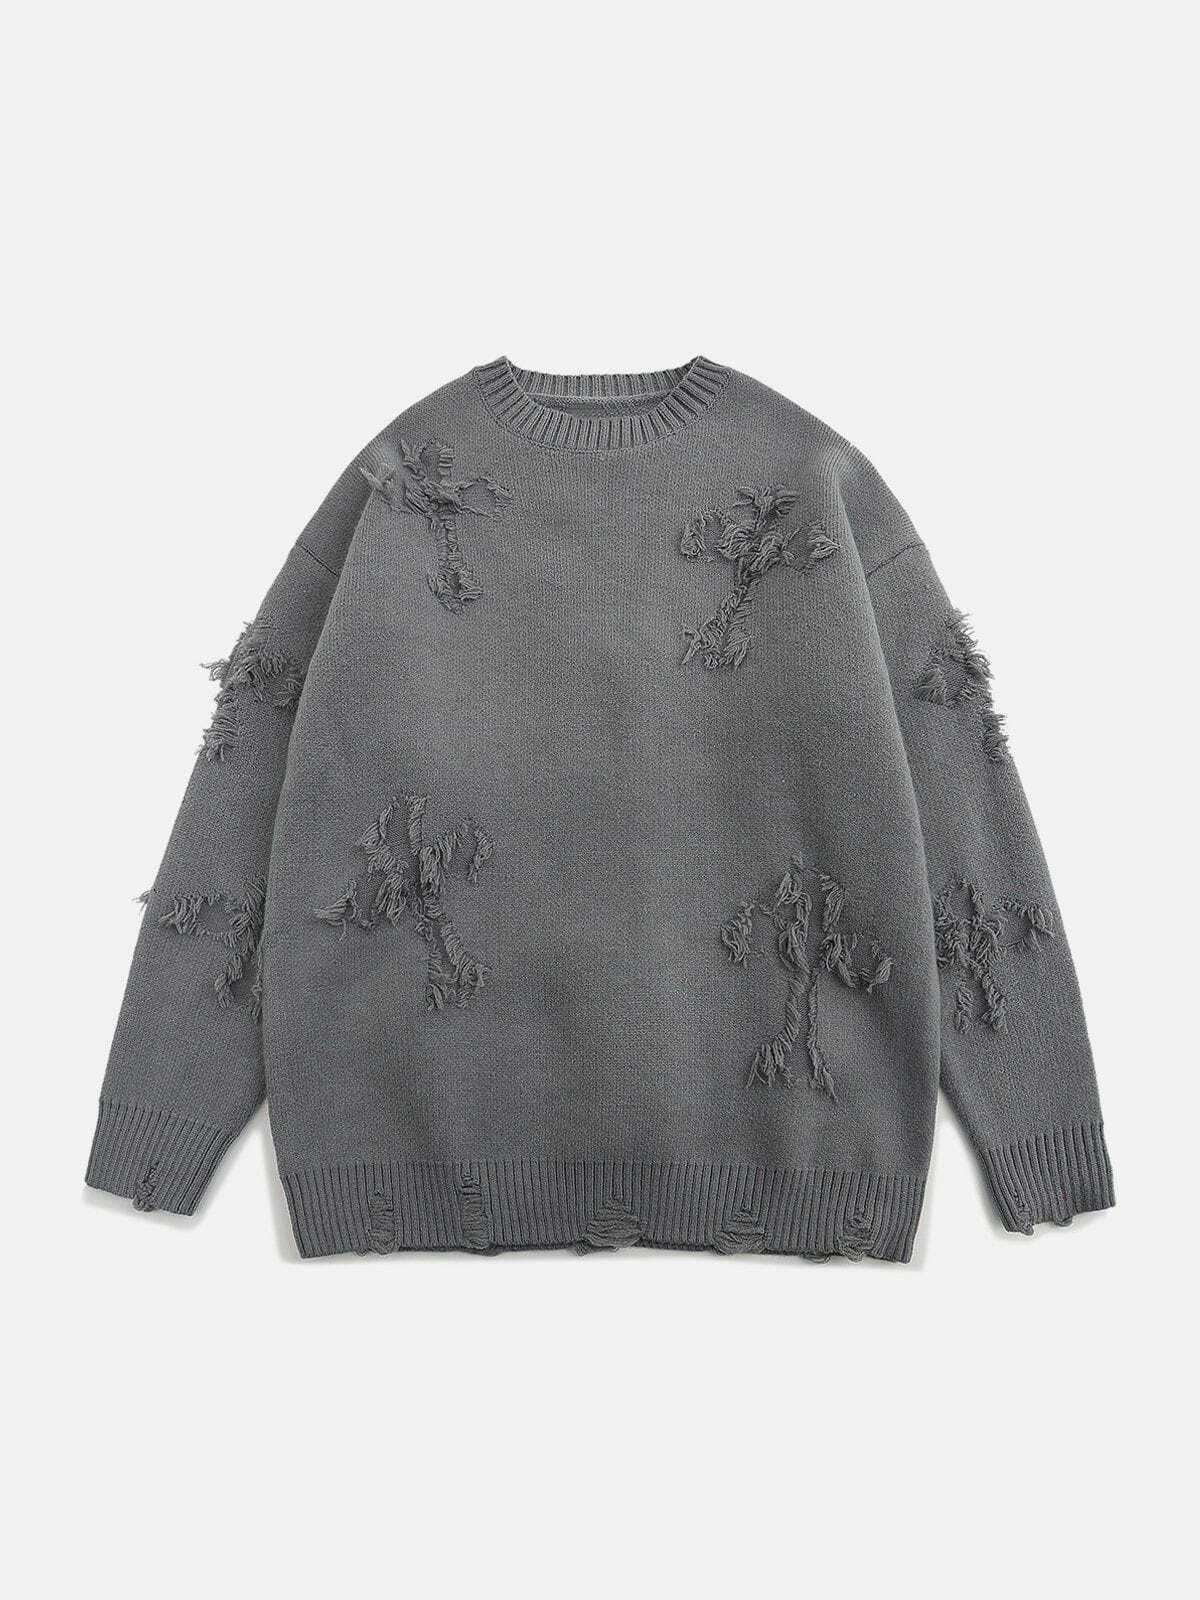 patchwork sweater urban chic & edgy design 5525